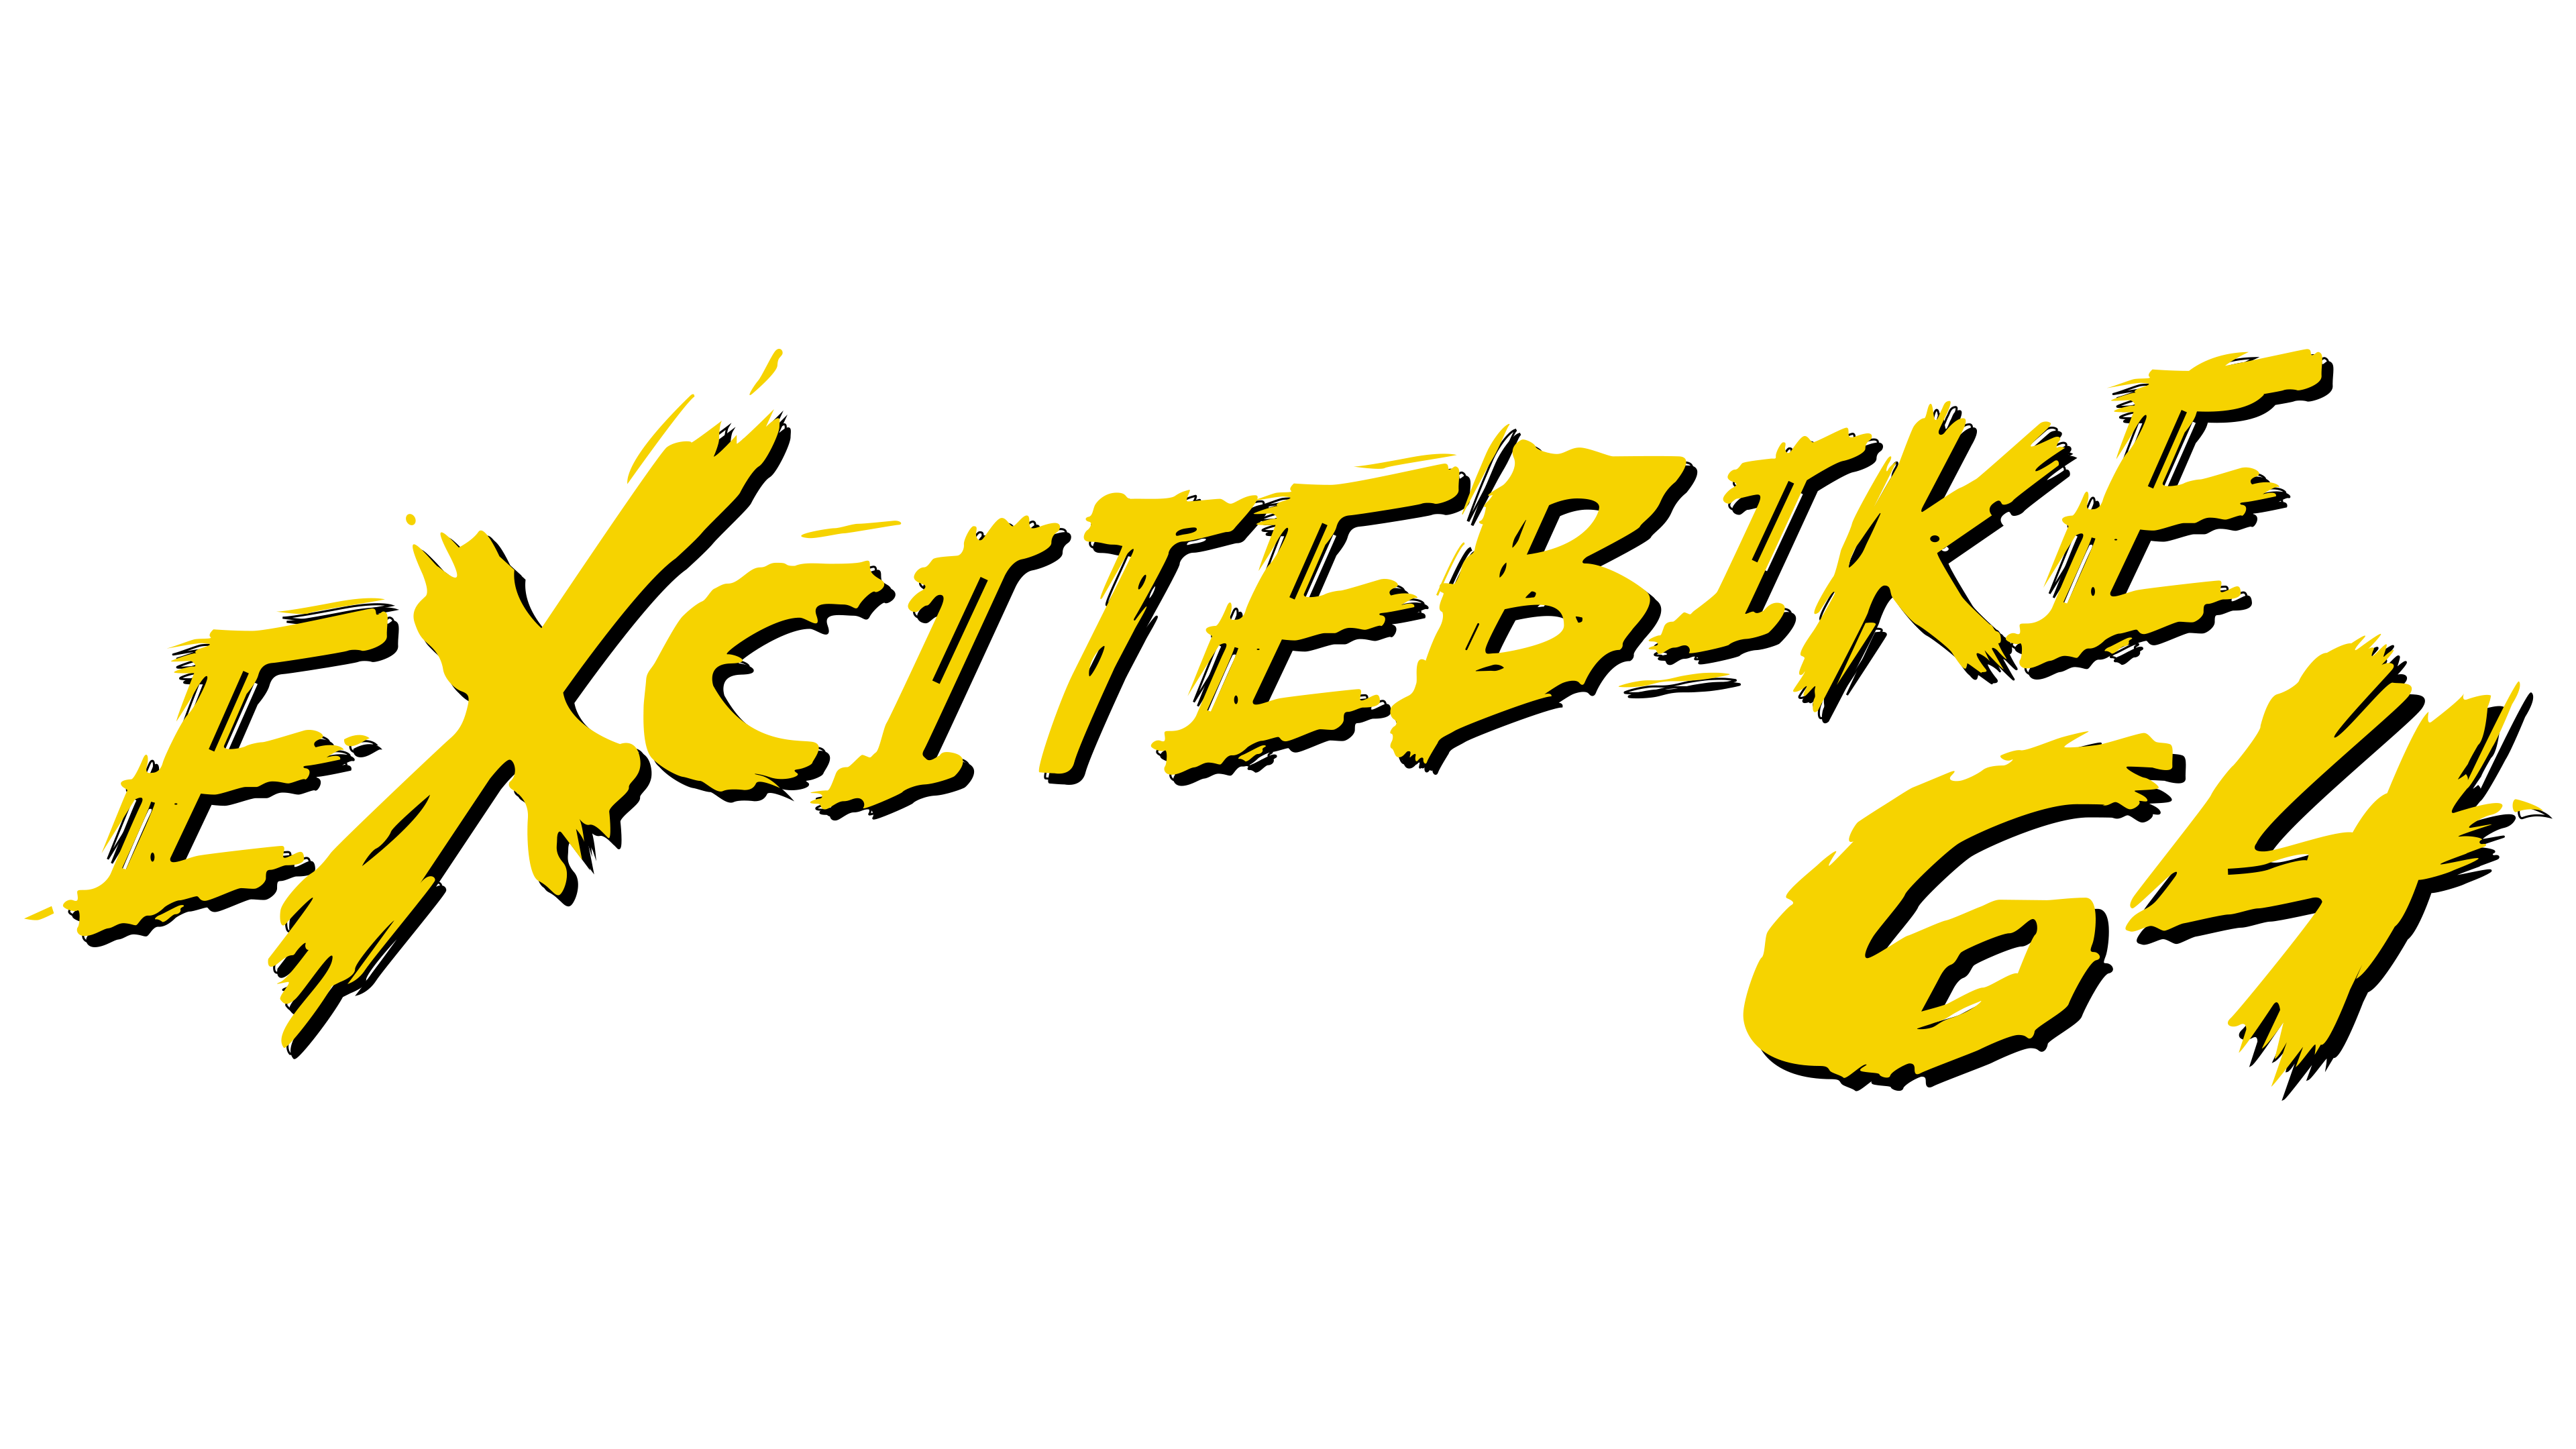 excitebike logo